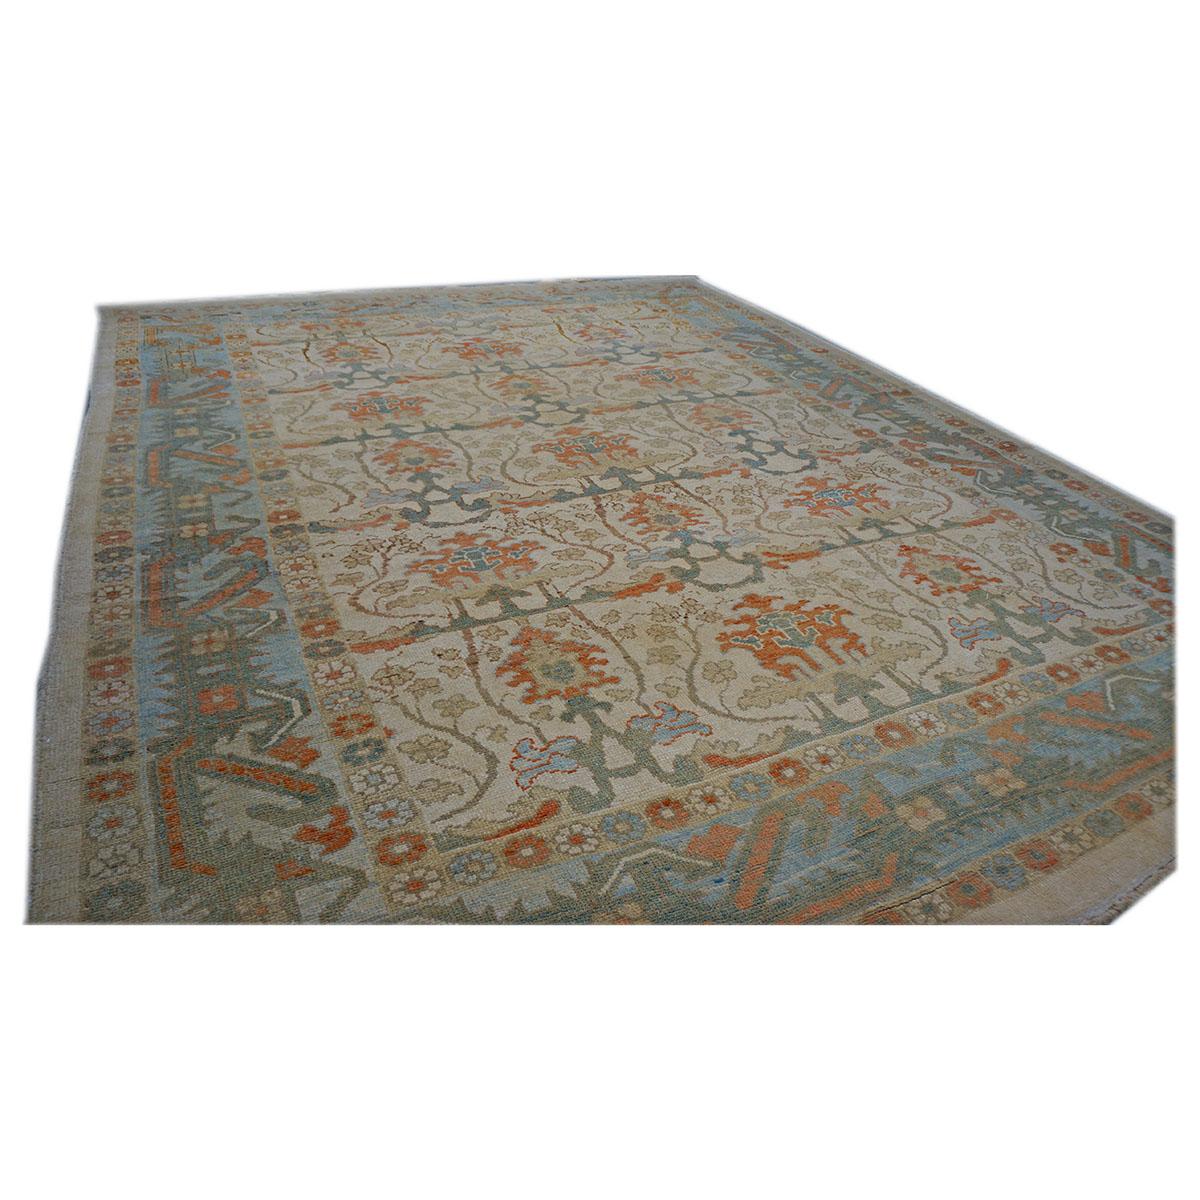 Turkish 21st Century William Morris Donegal Carpet 10x13 Tan & Blue Handmade Area Rug For Sale